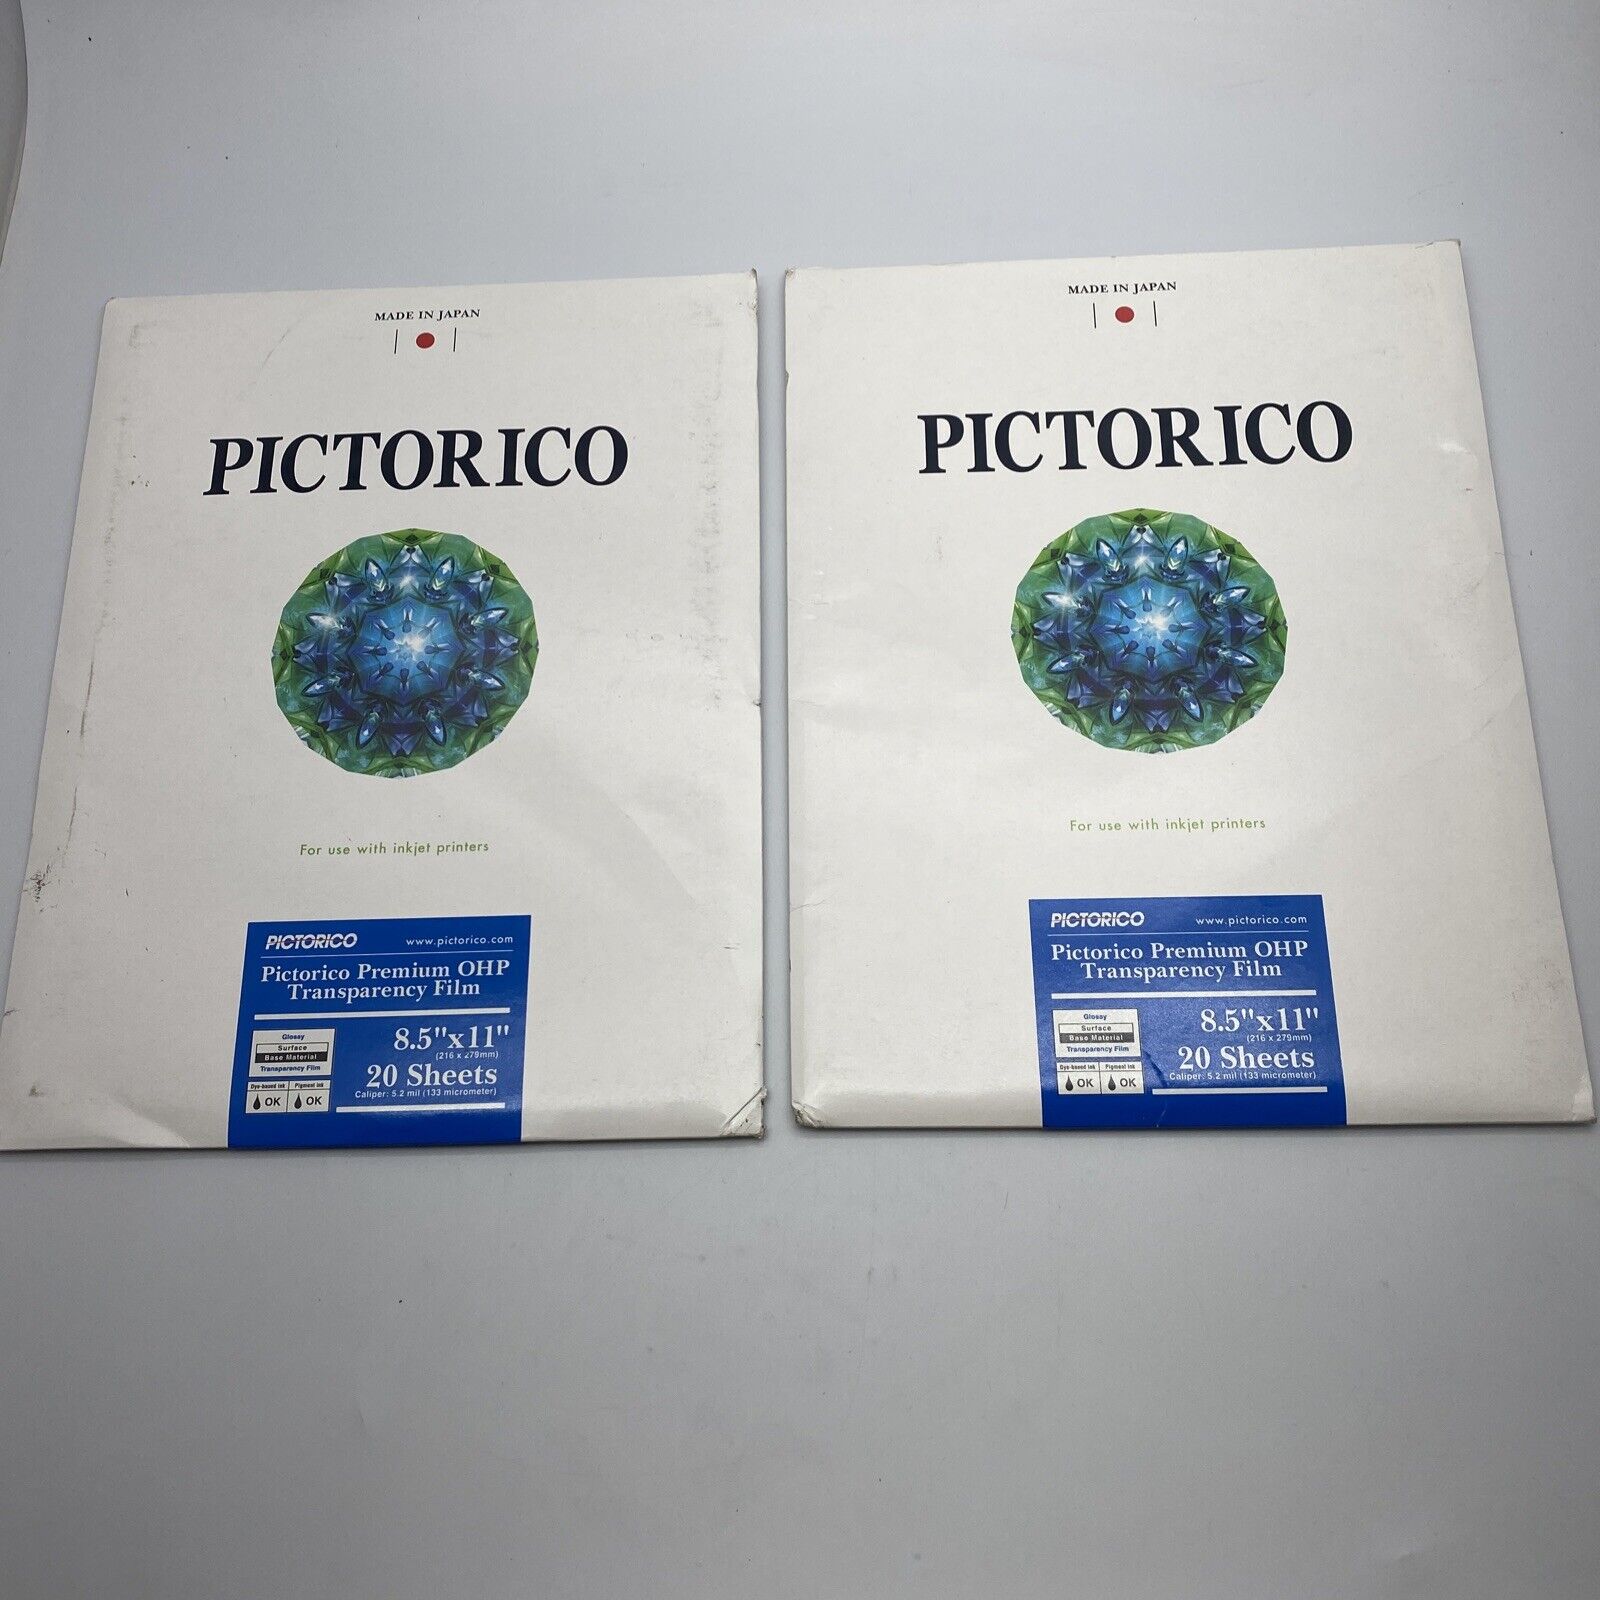 Pictorico TPU100 Premium OHP Transparency Film 8.5x11" #PICT35009